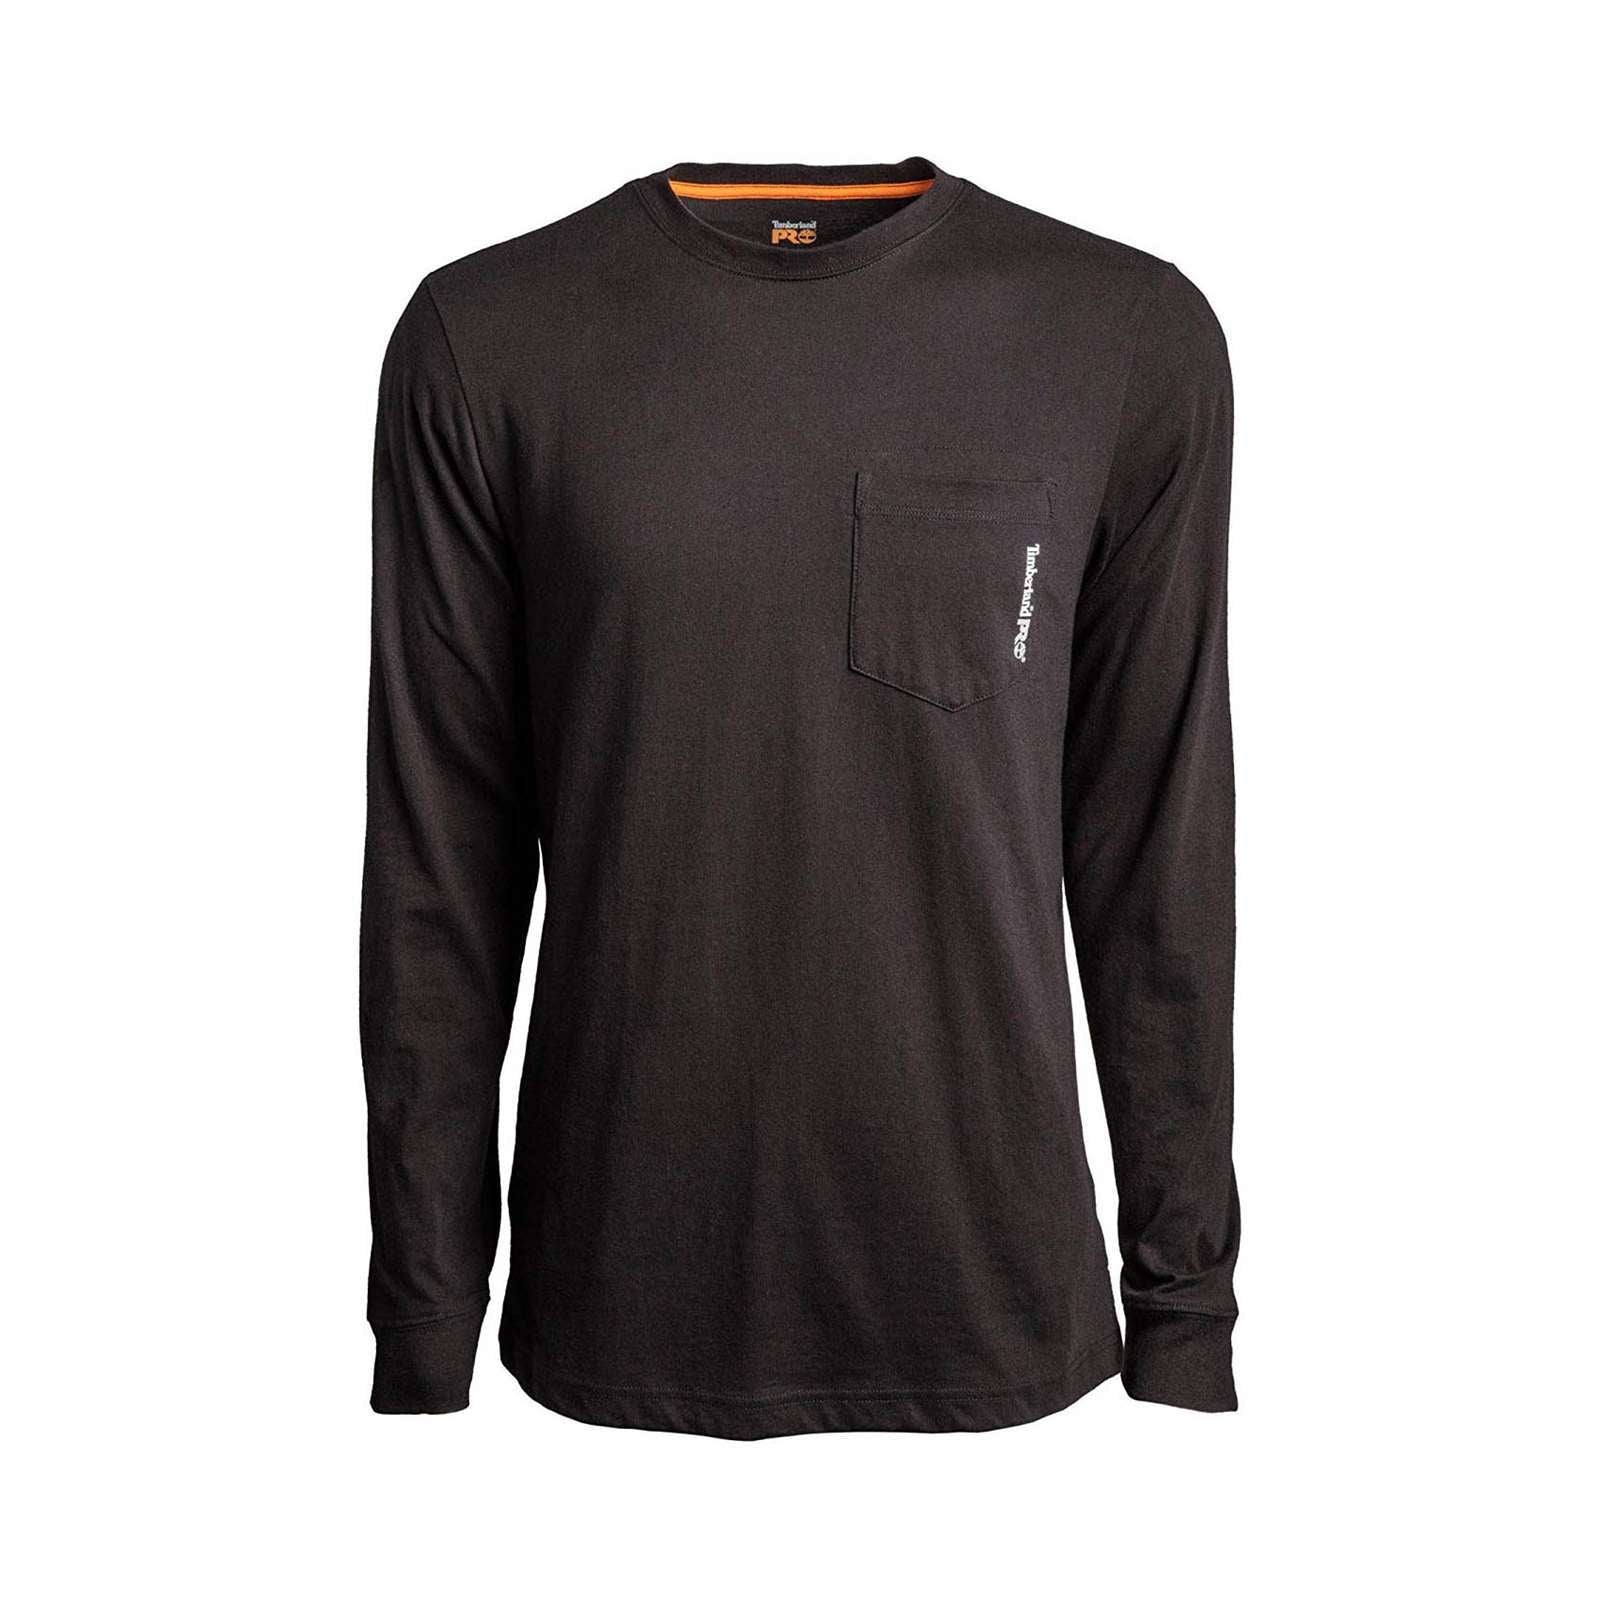 Timberland Pro Men B&T Base Plate Blended Long Sleeve T-Shirt